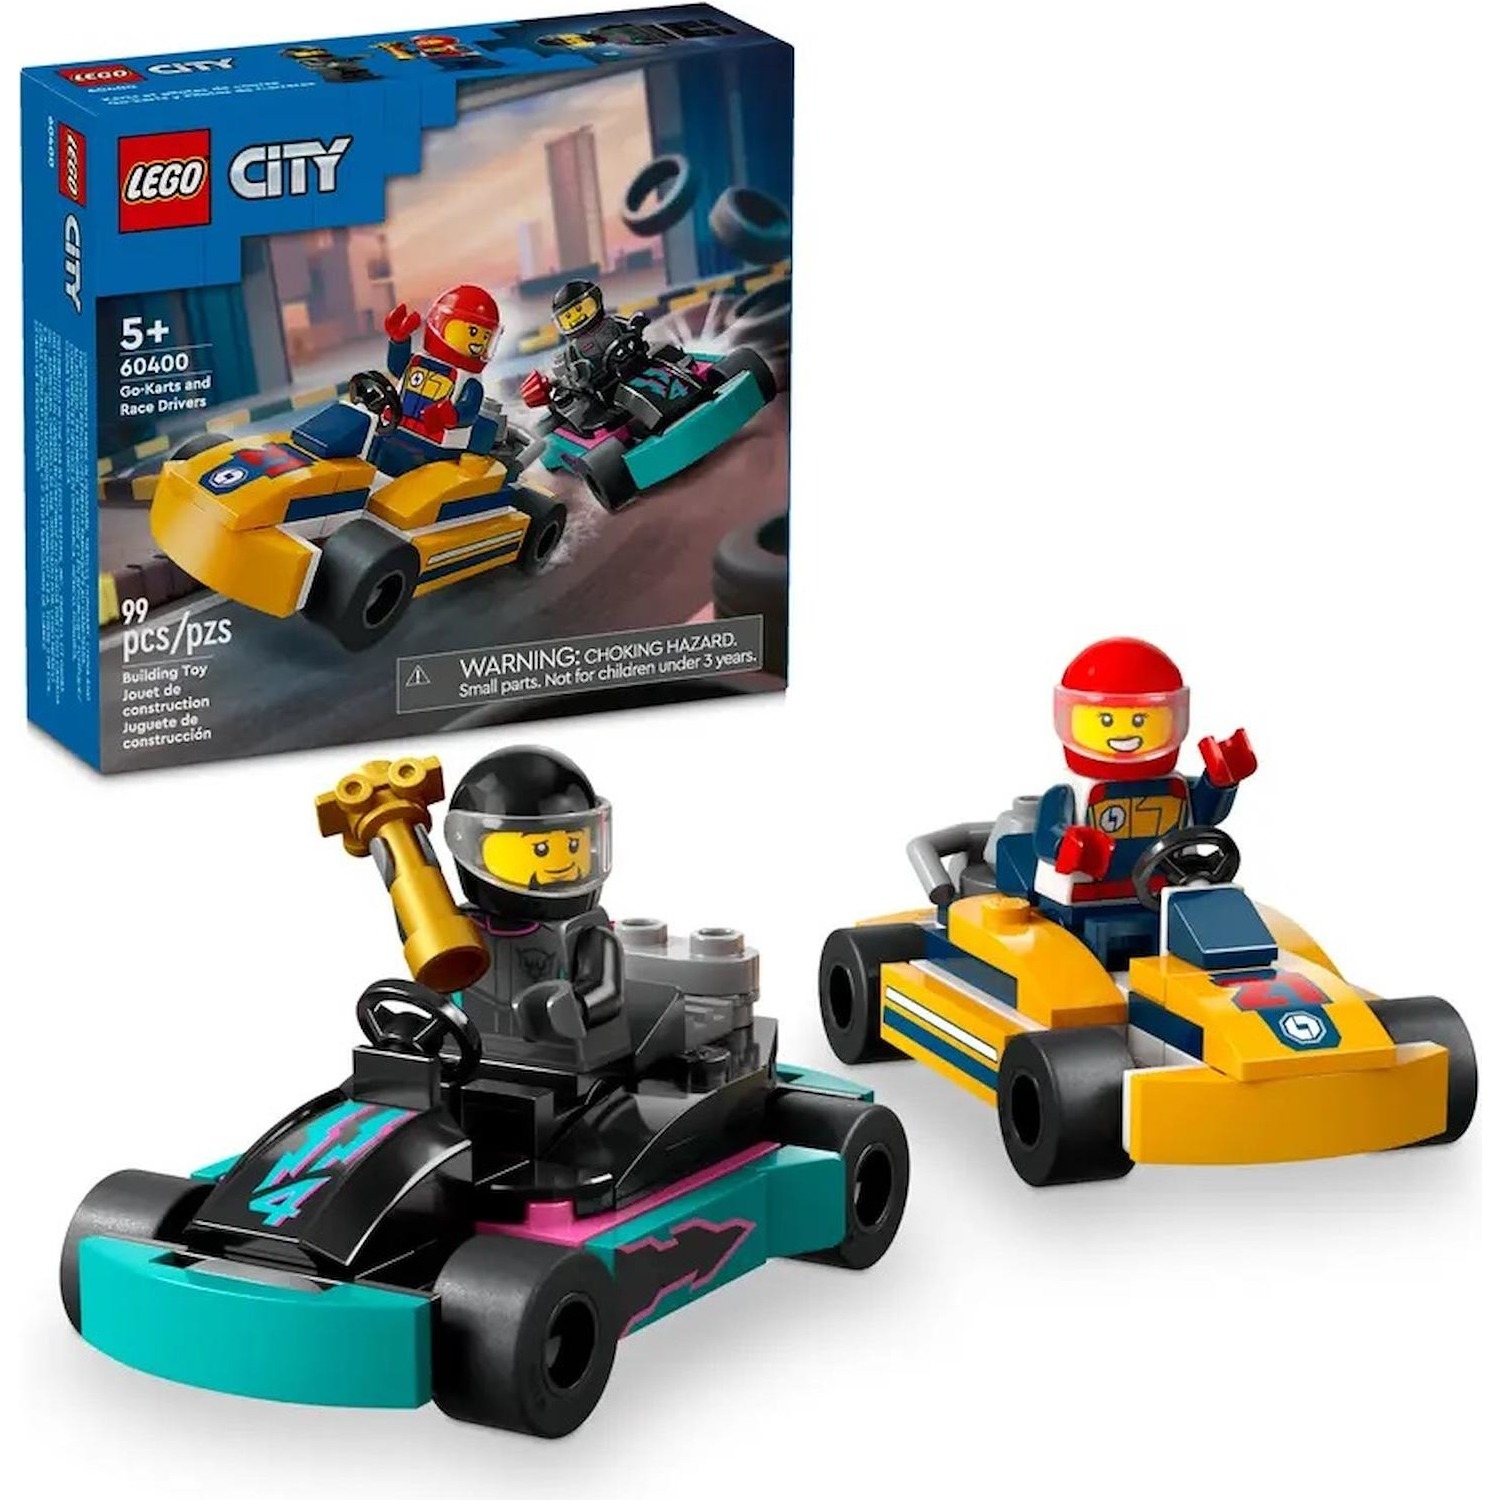 Immagine per Lego City Go-kart e piloti da DIMOStore